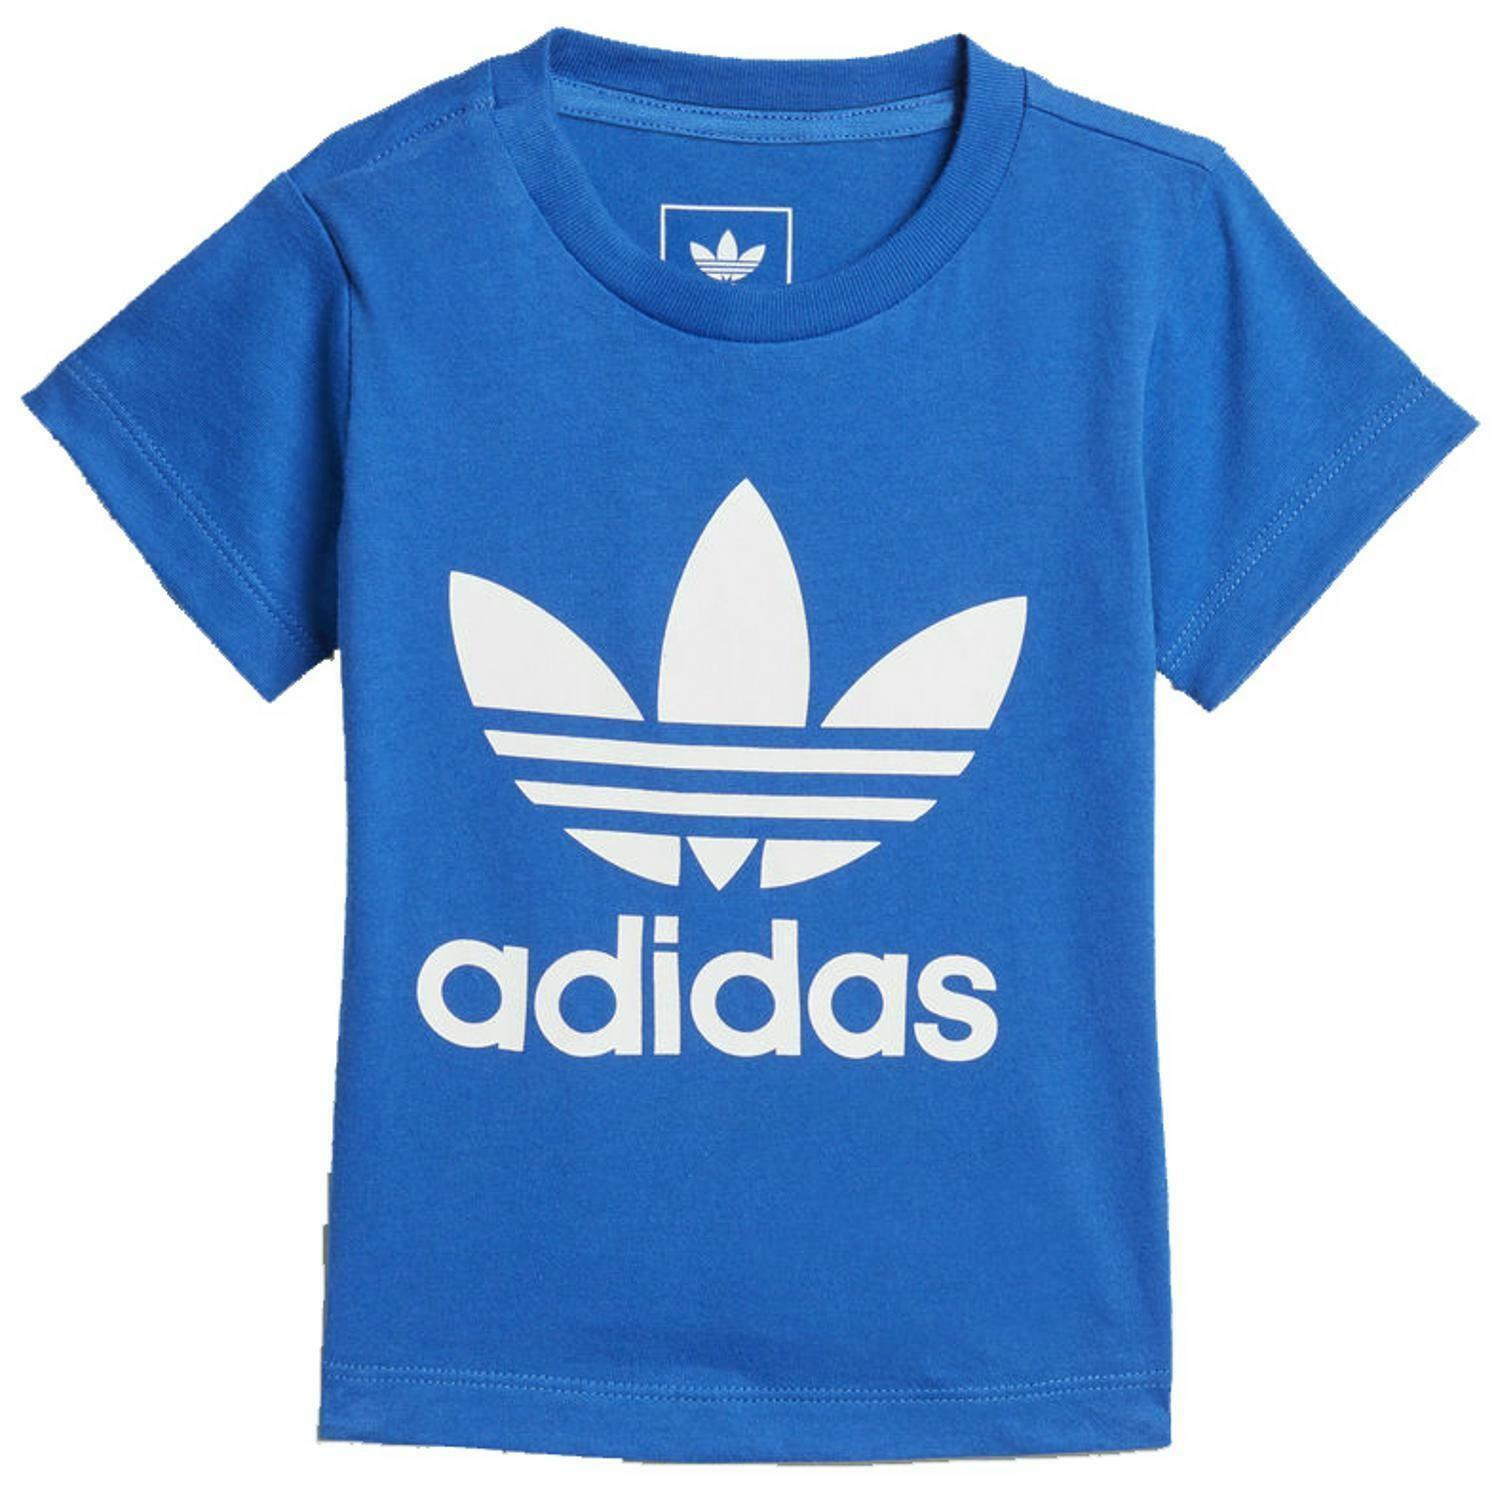 adidas adidas originals trefoil t-shirt bambino blu